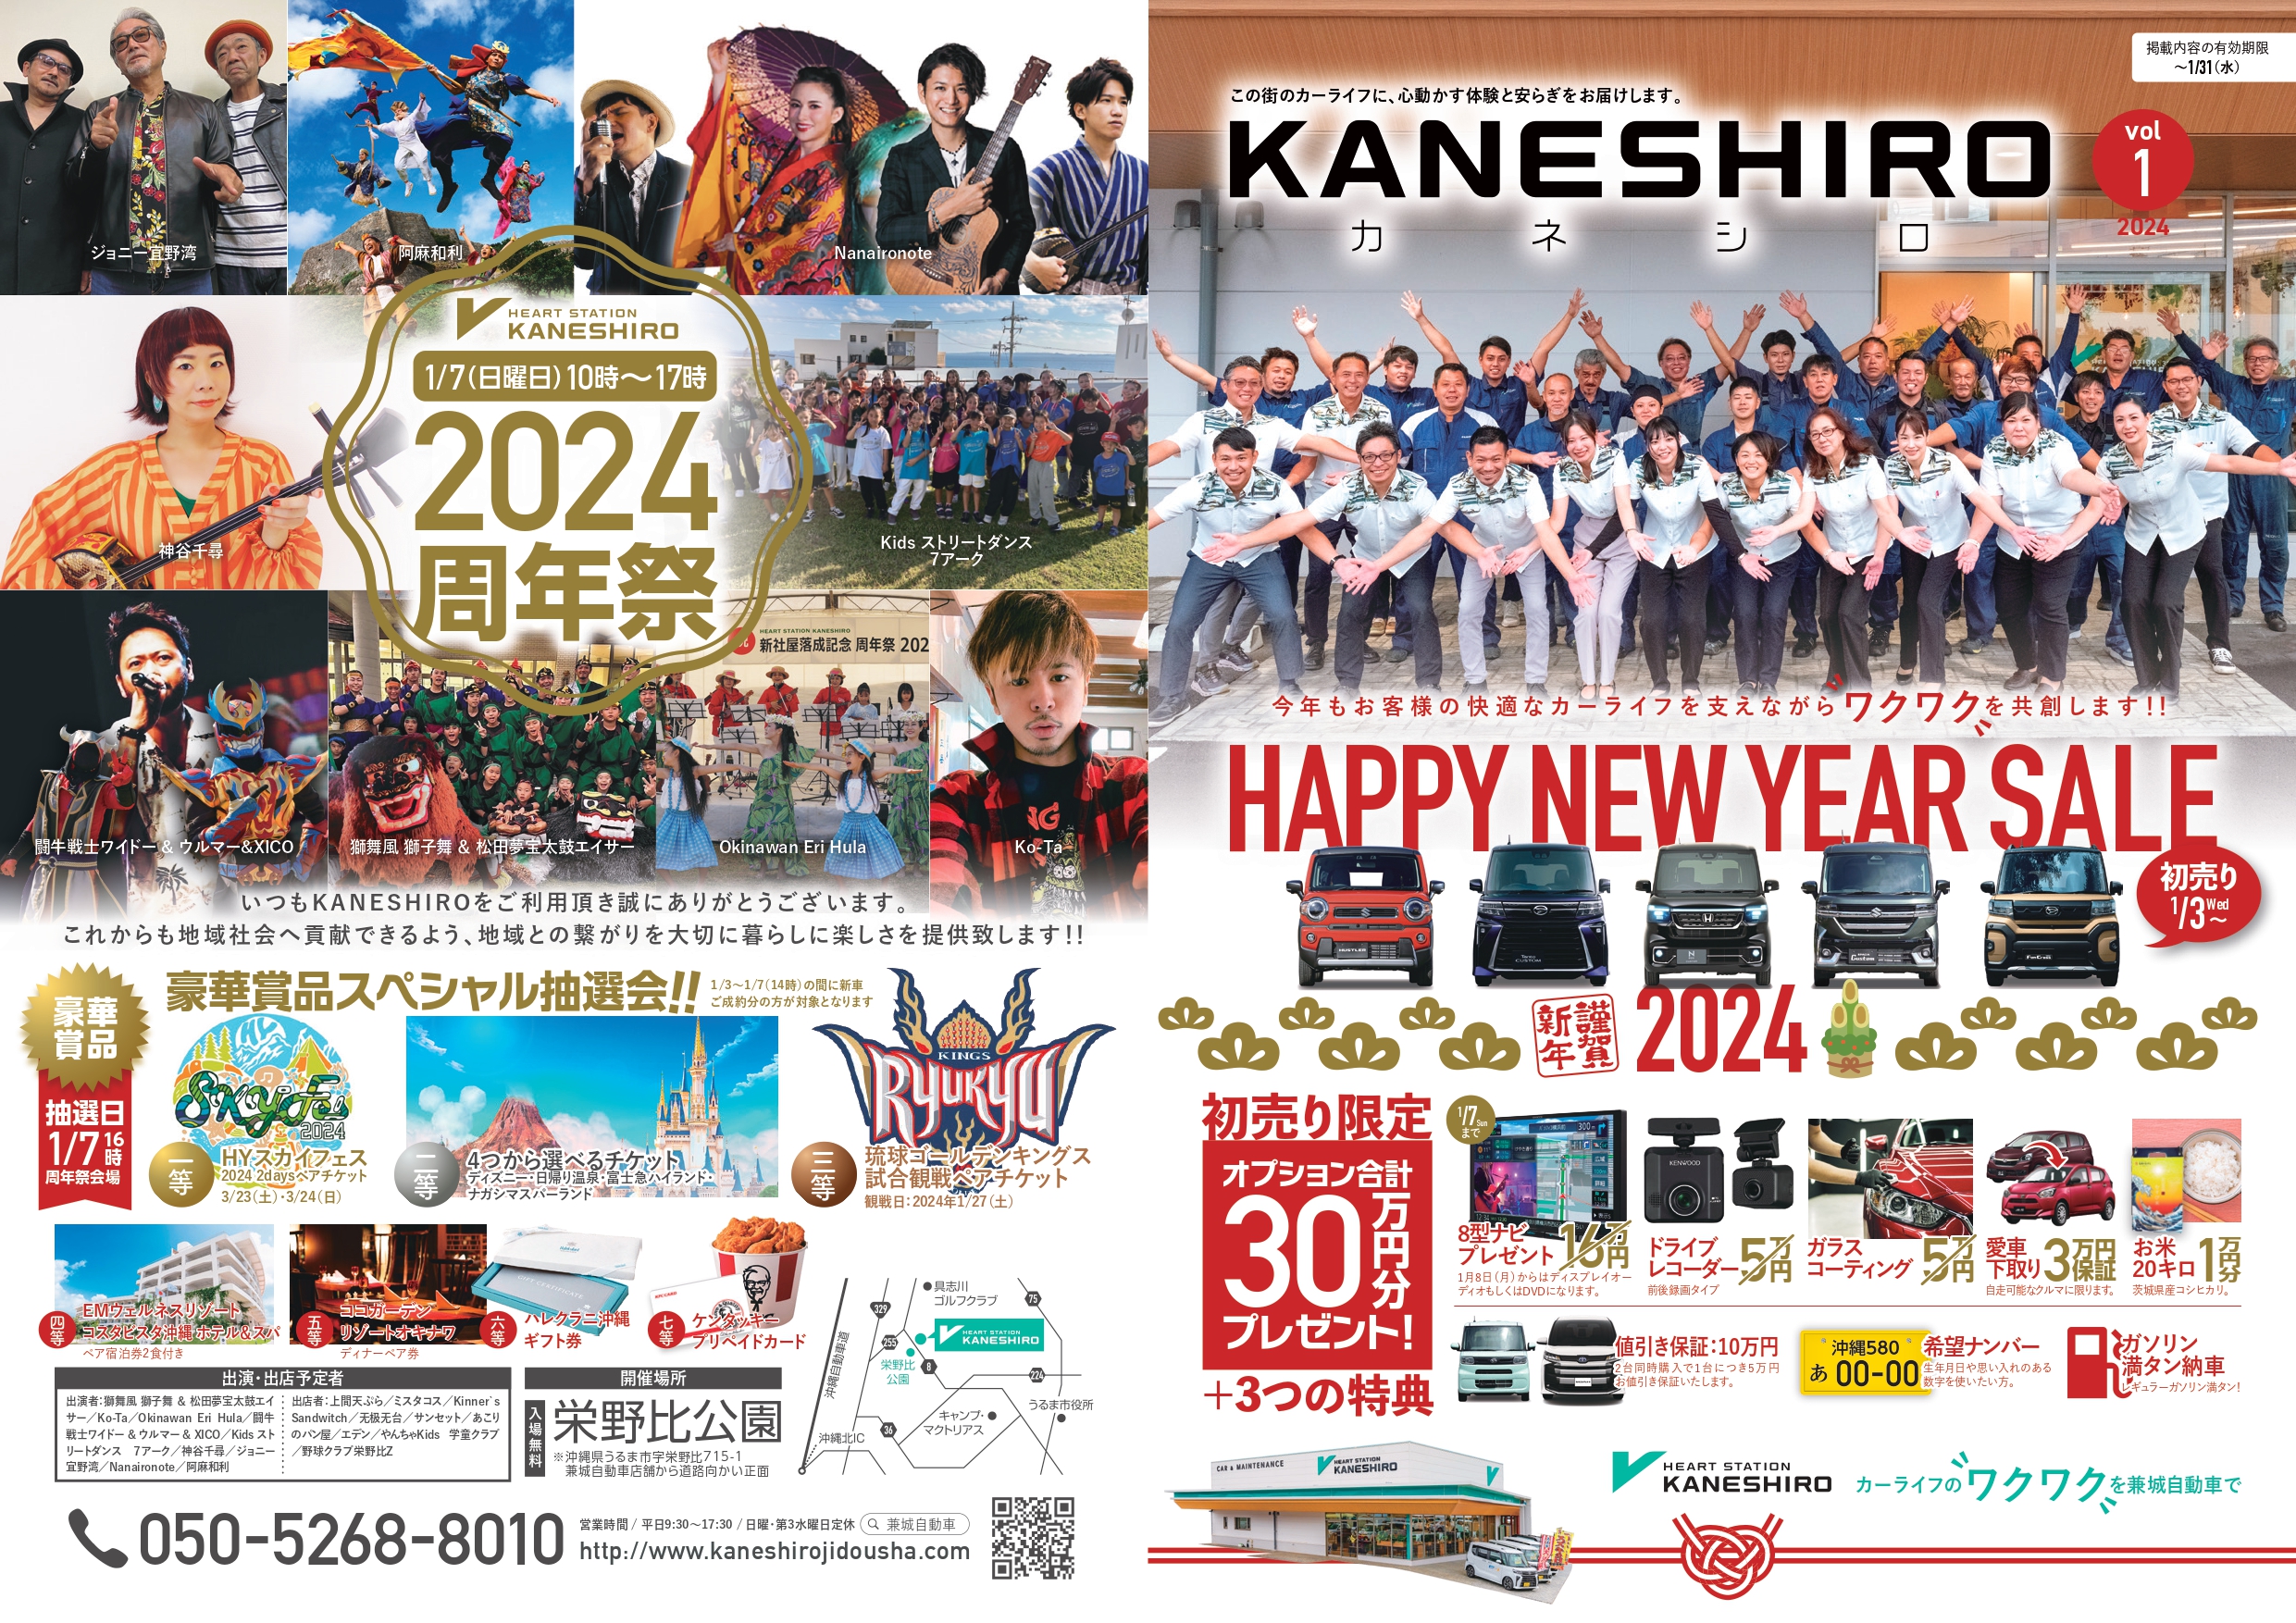 HEART STATION KANESHIRO 大感謝祭 2024